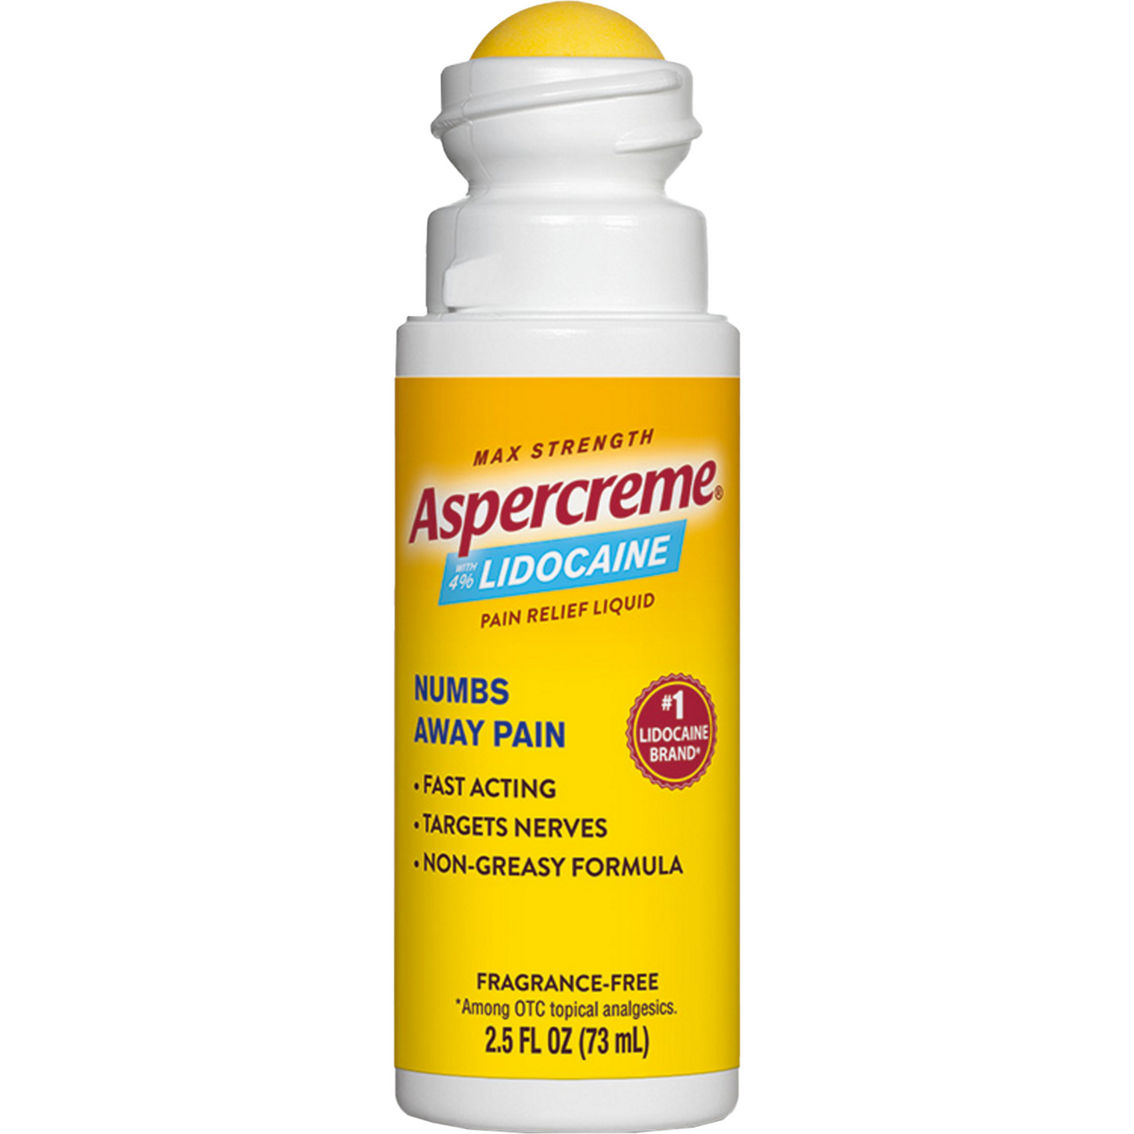 Aspercreme Lidocaine Roll On 2.5 oz. - Image 2 of 4